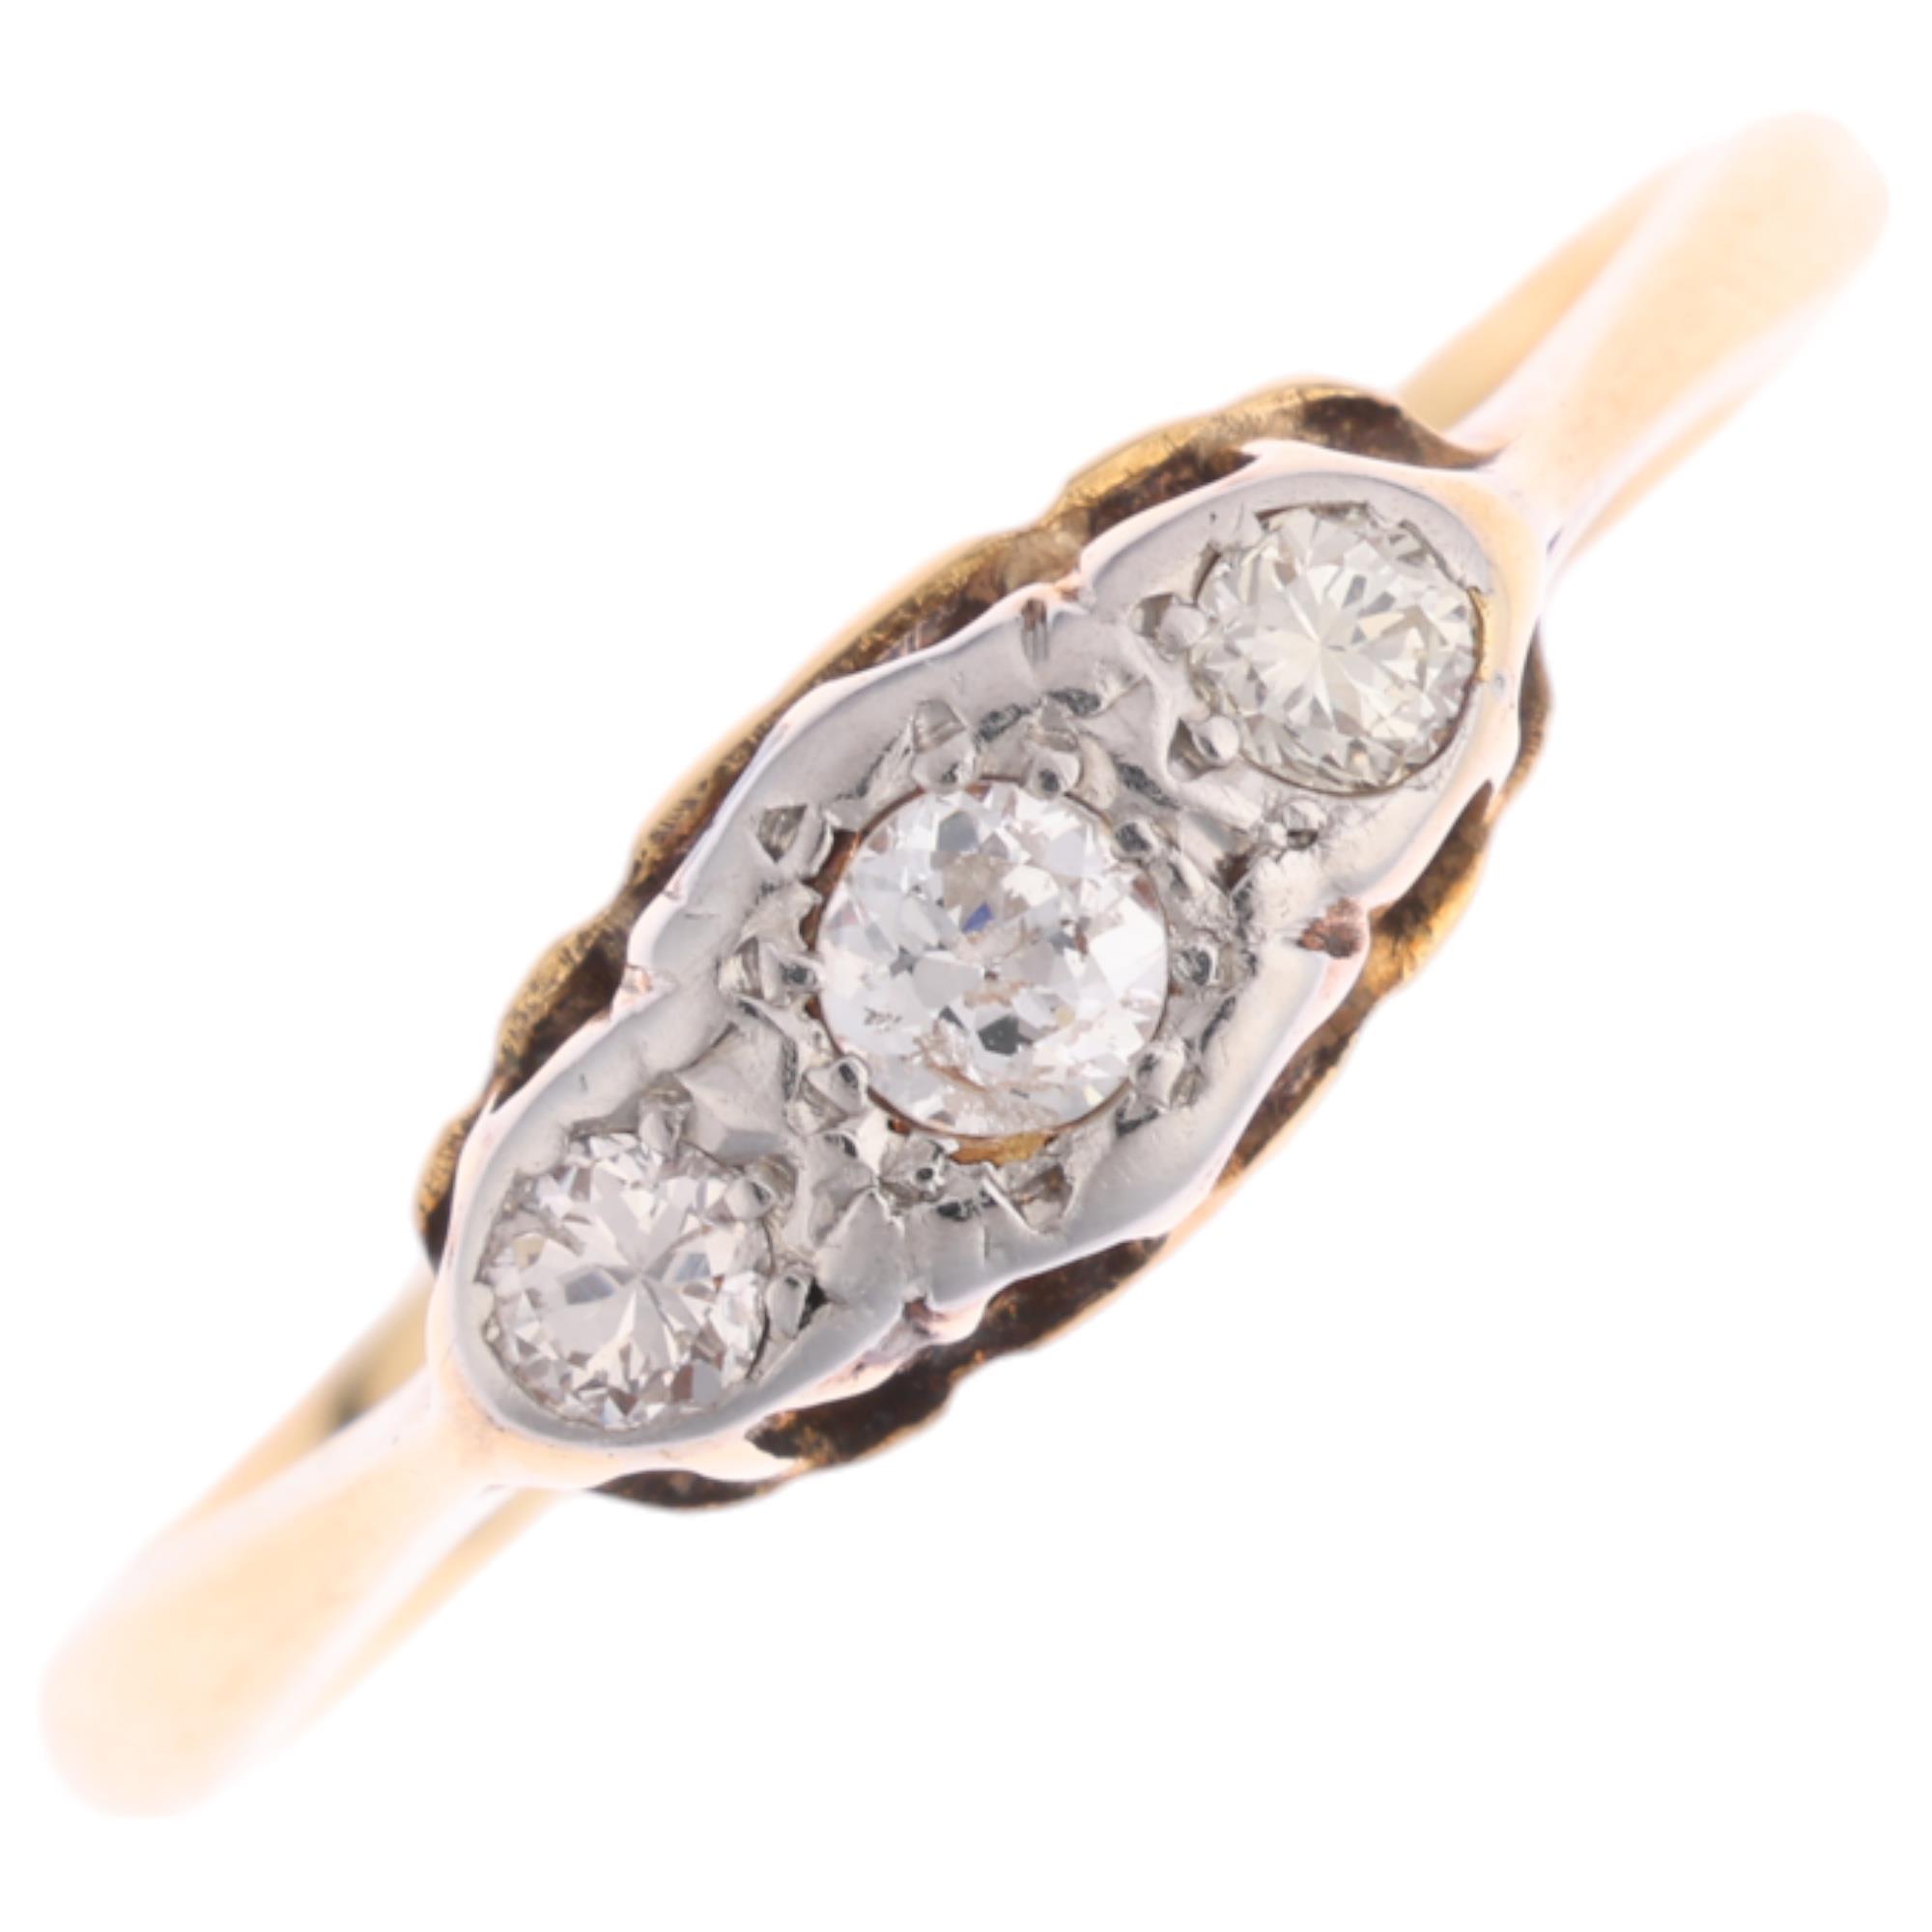 An 18ct gold three stone diamond ring, platinum-topped set with round brilliant-cut diamonds,